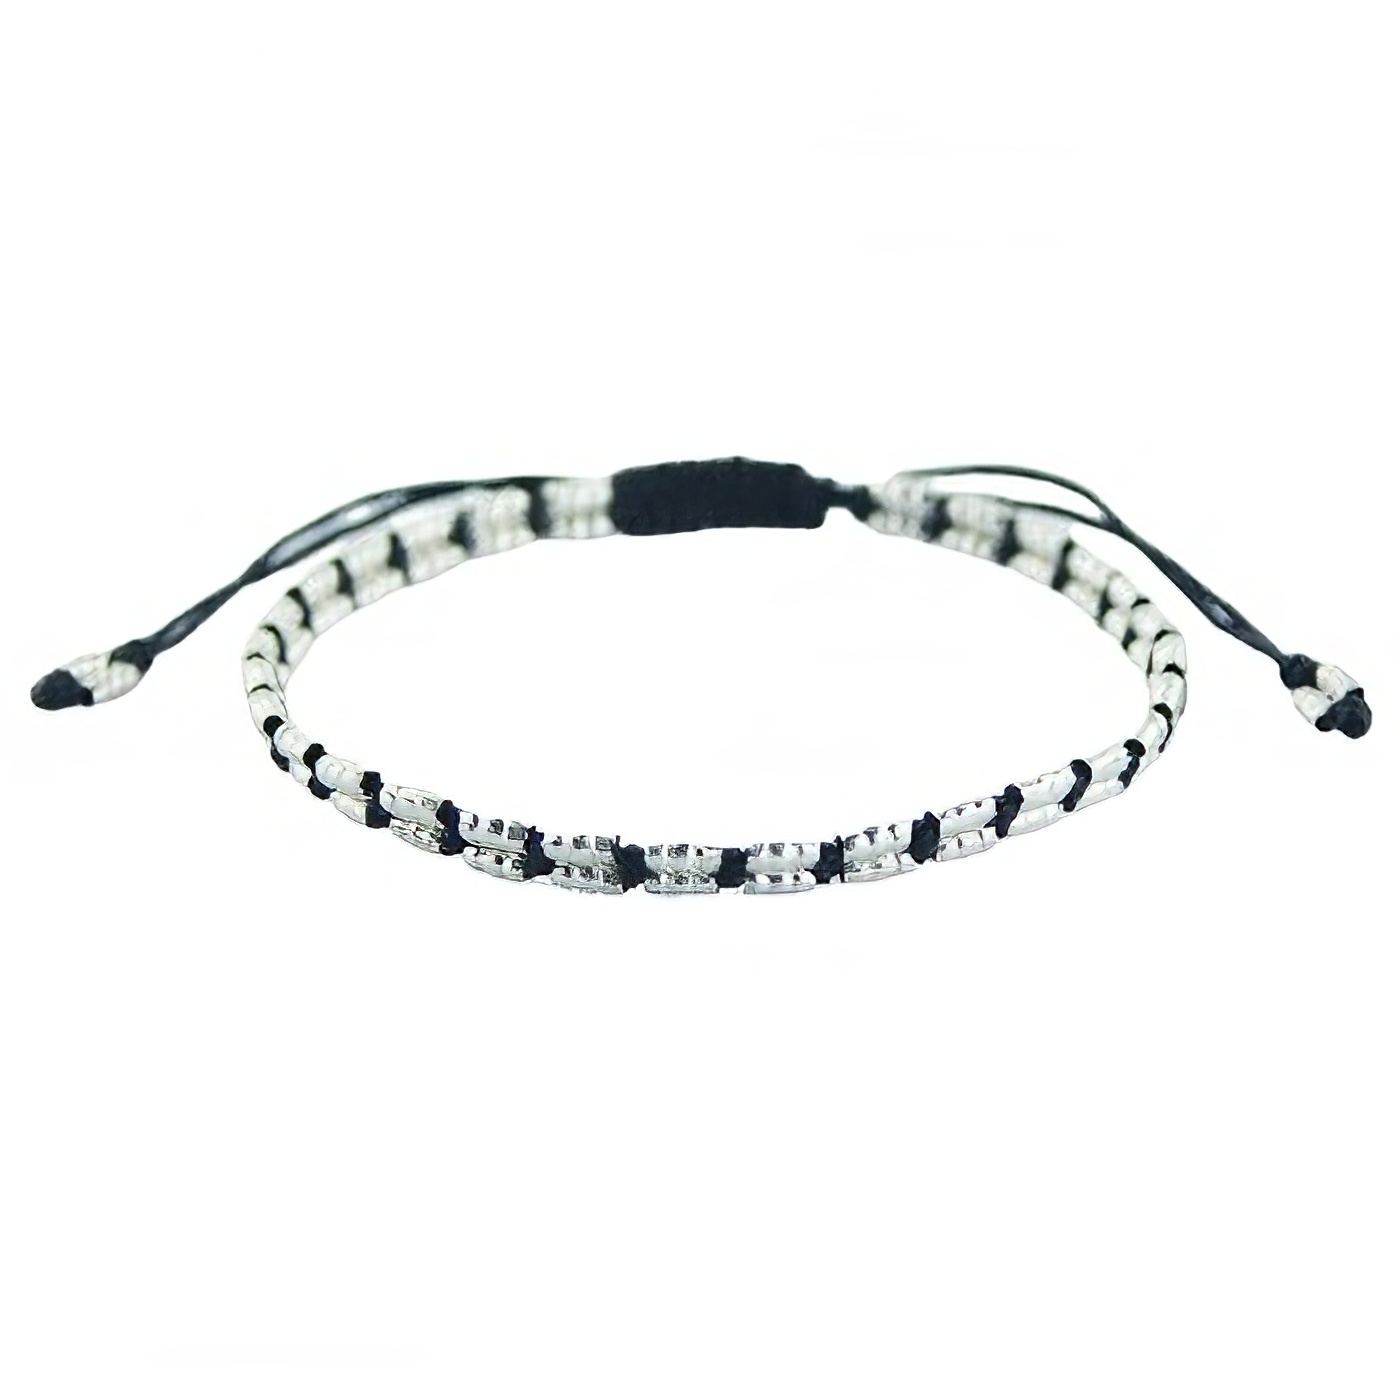 Macrame bracelet long sterling silver beads 